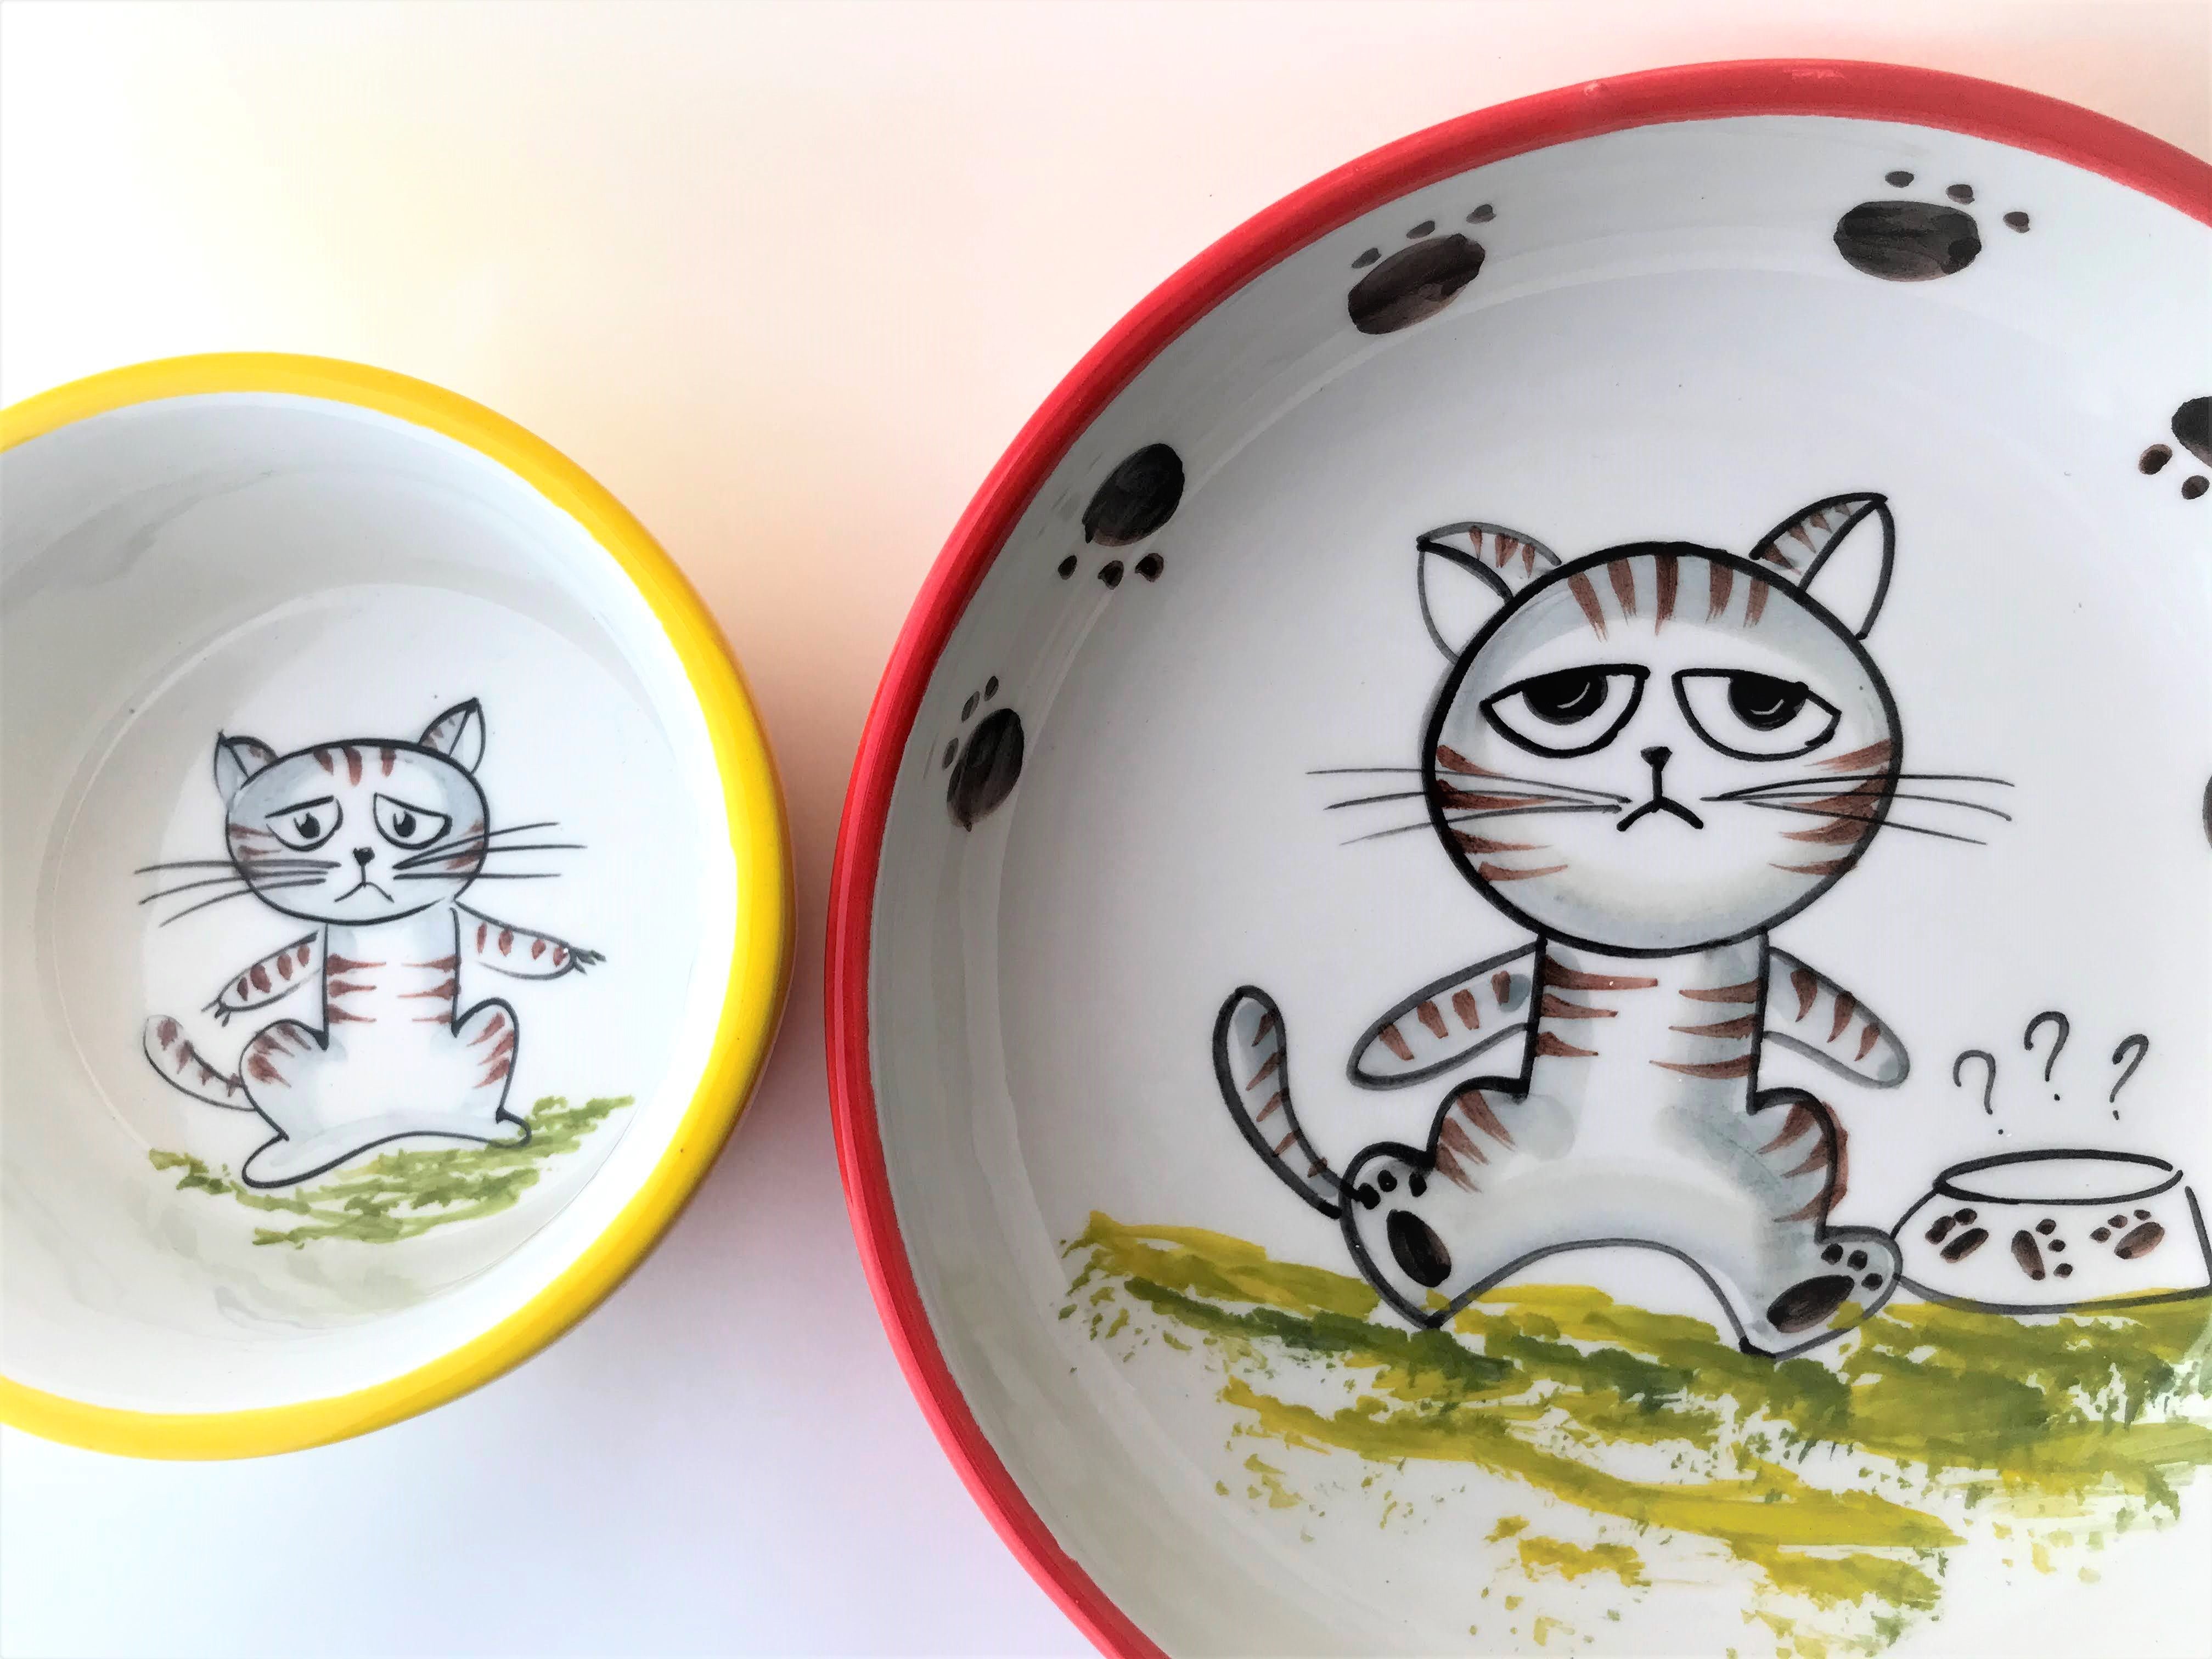 Striped Sad Cat Ceramic Bowls